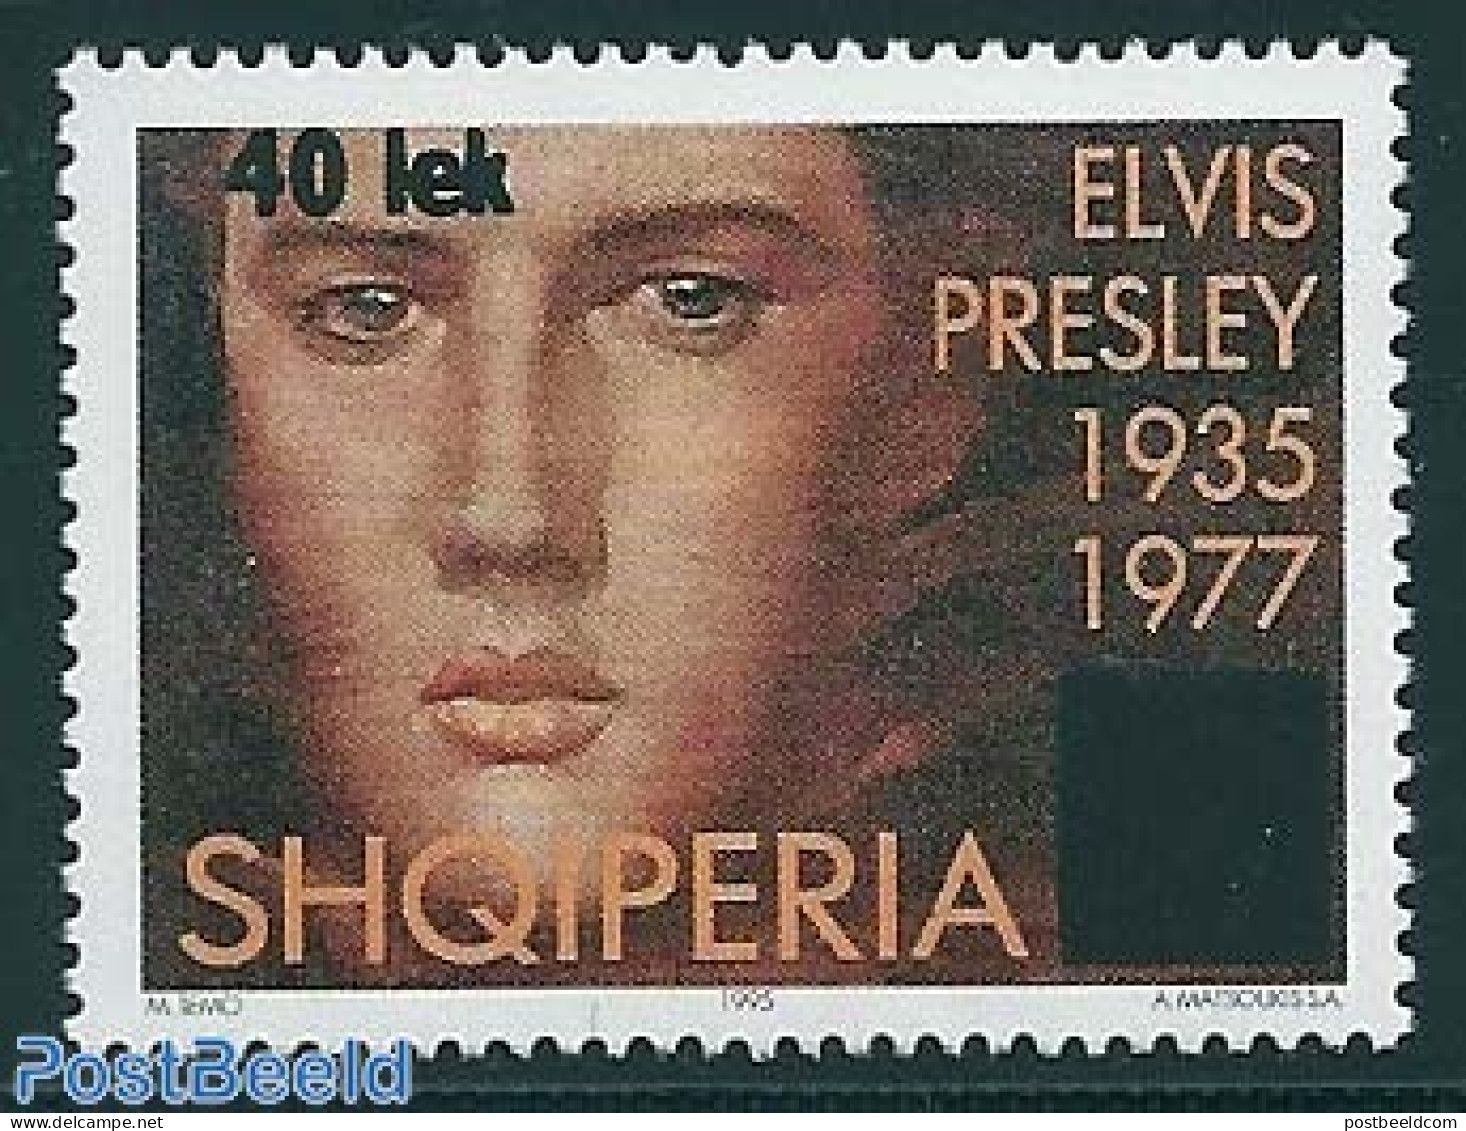 Albania 2006 40L On 3L, Stamp Out Of Set, Mint NH, Performance Art - Elvis Presley - Music - Popular Music - Elvis Presley